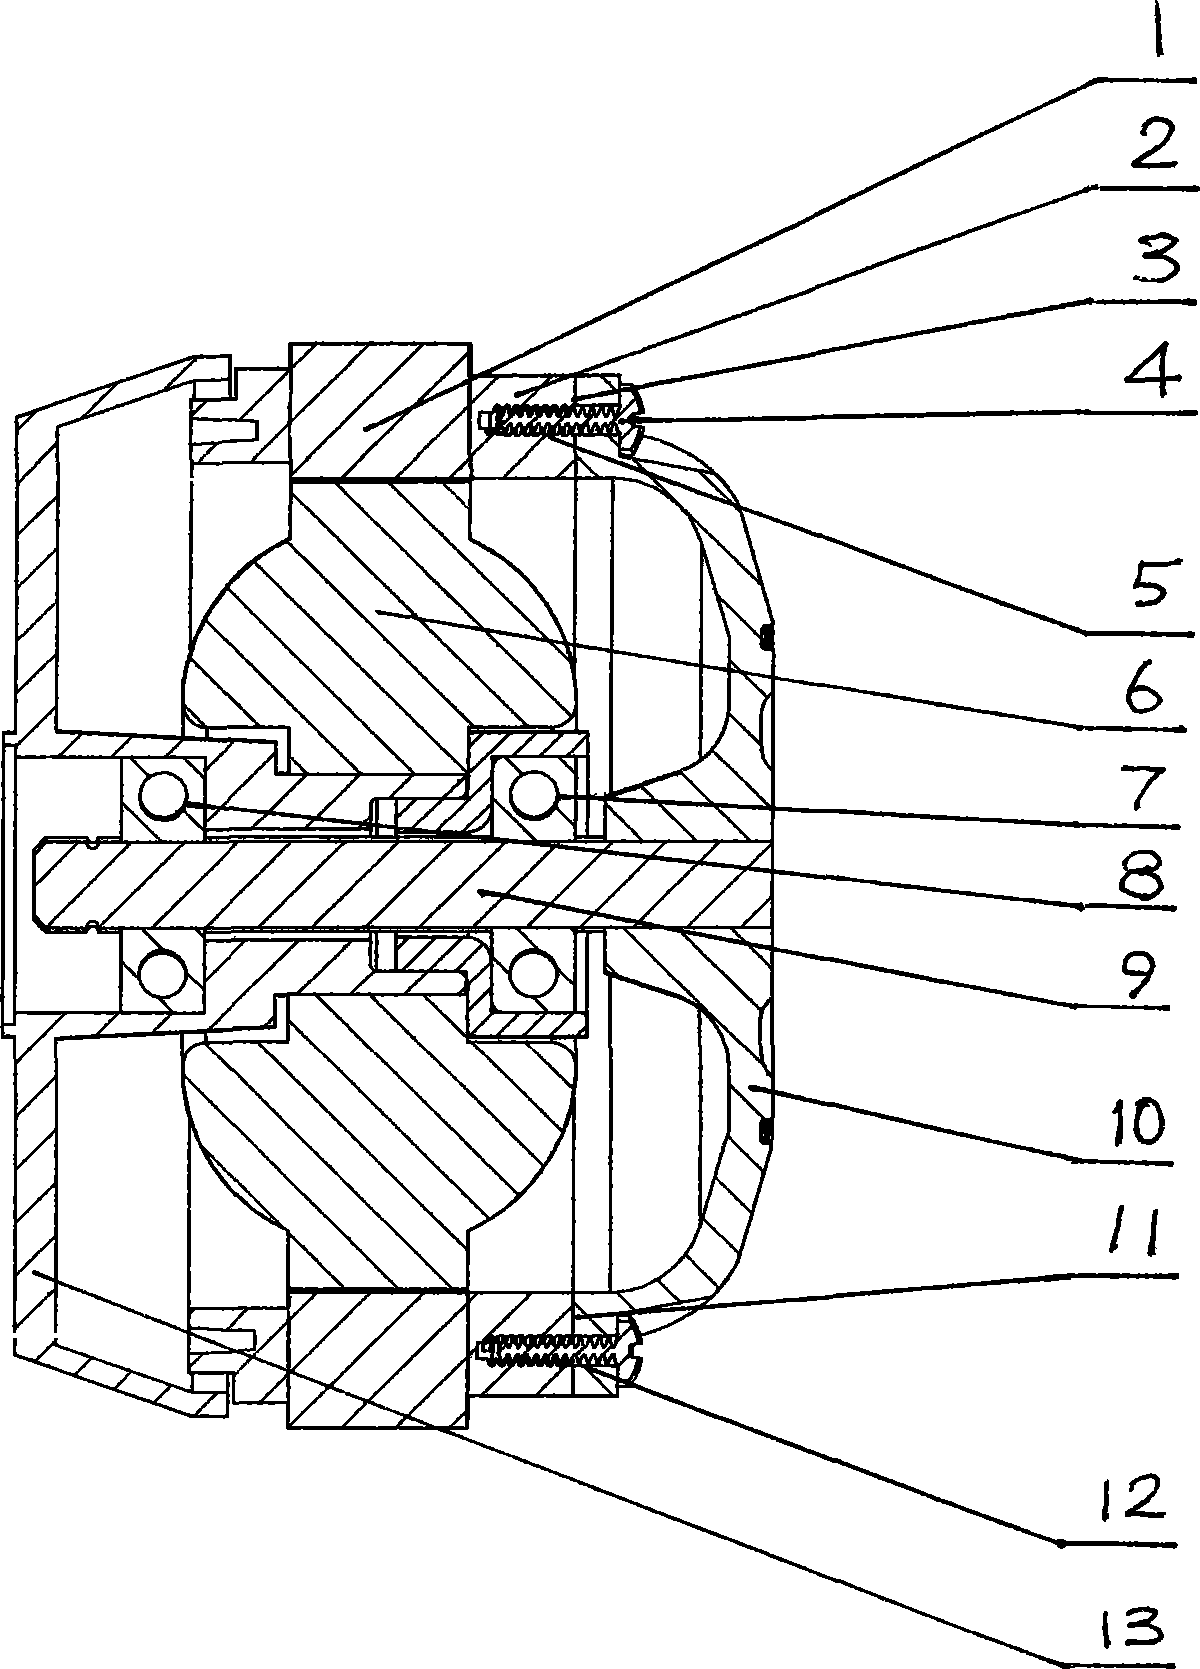 Low-power external rotor alternate current motor